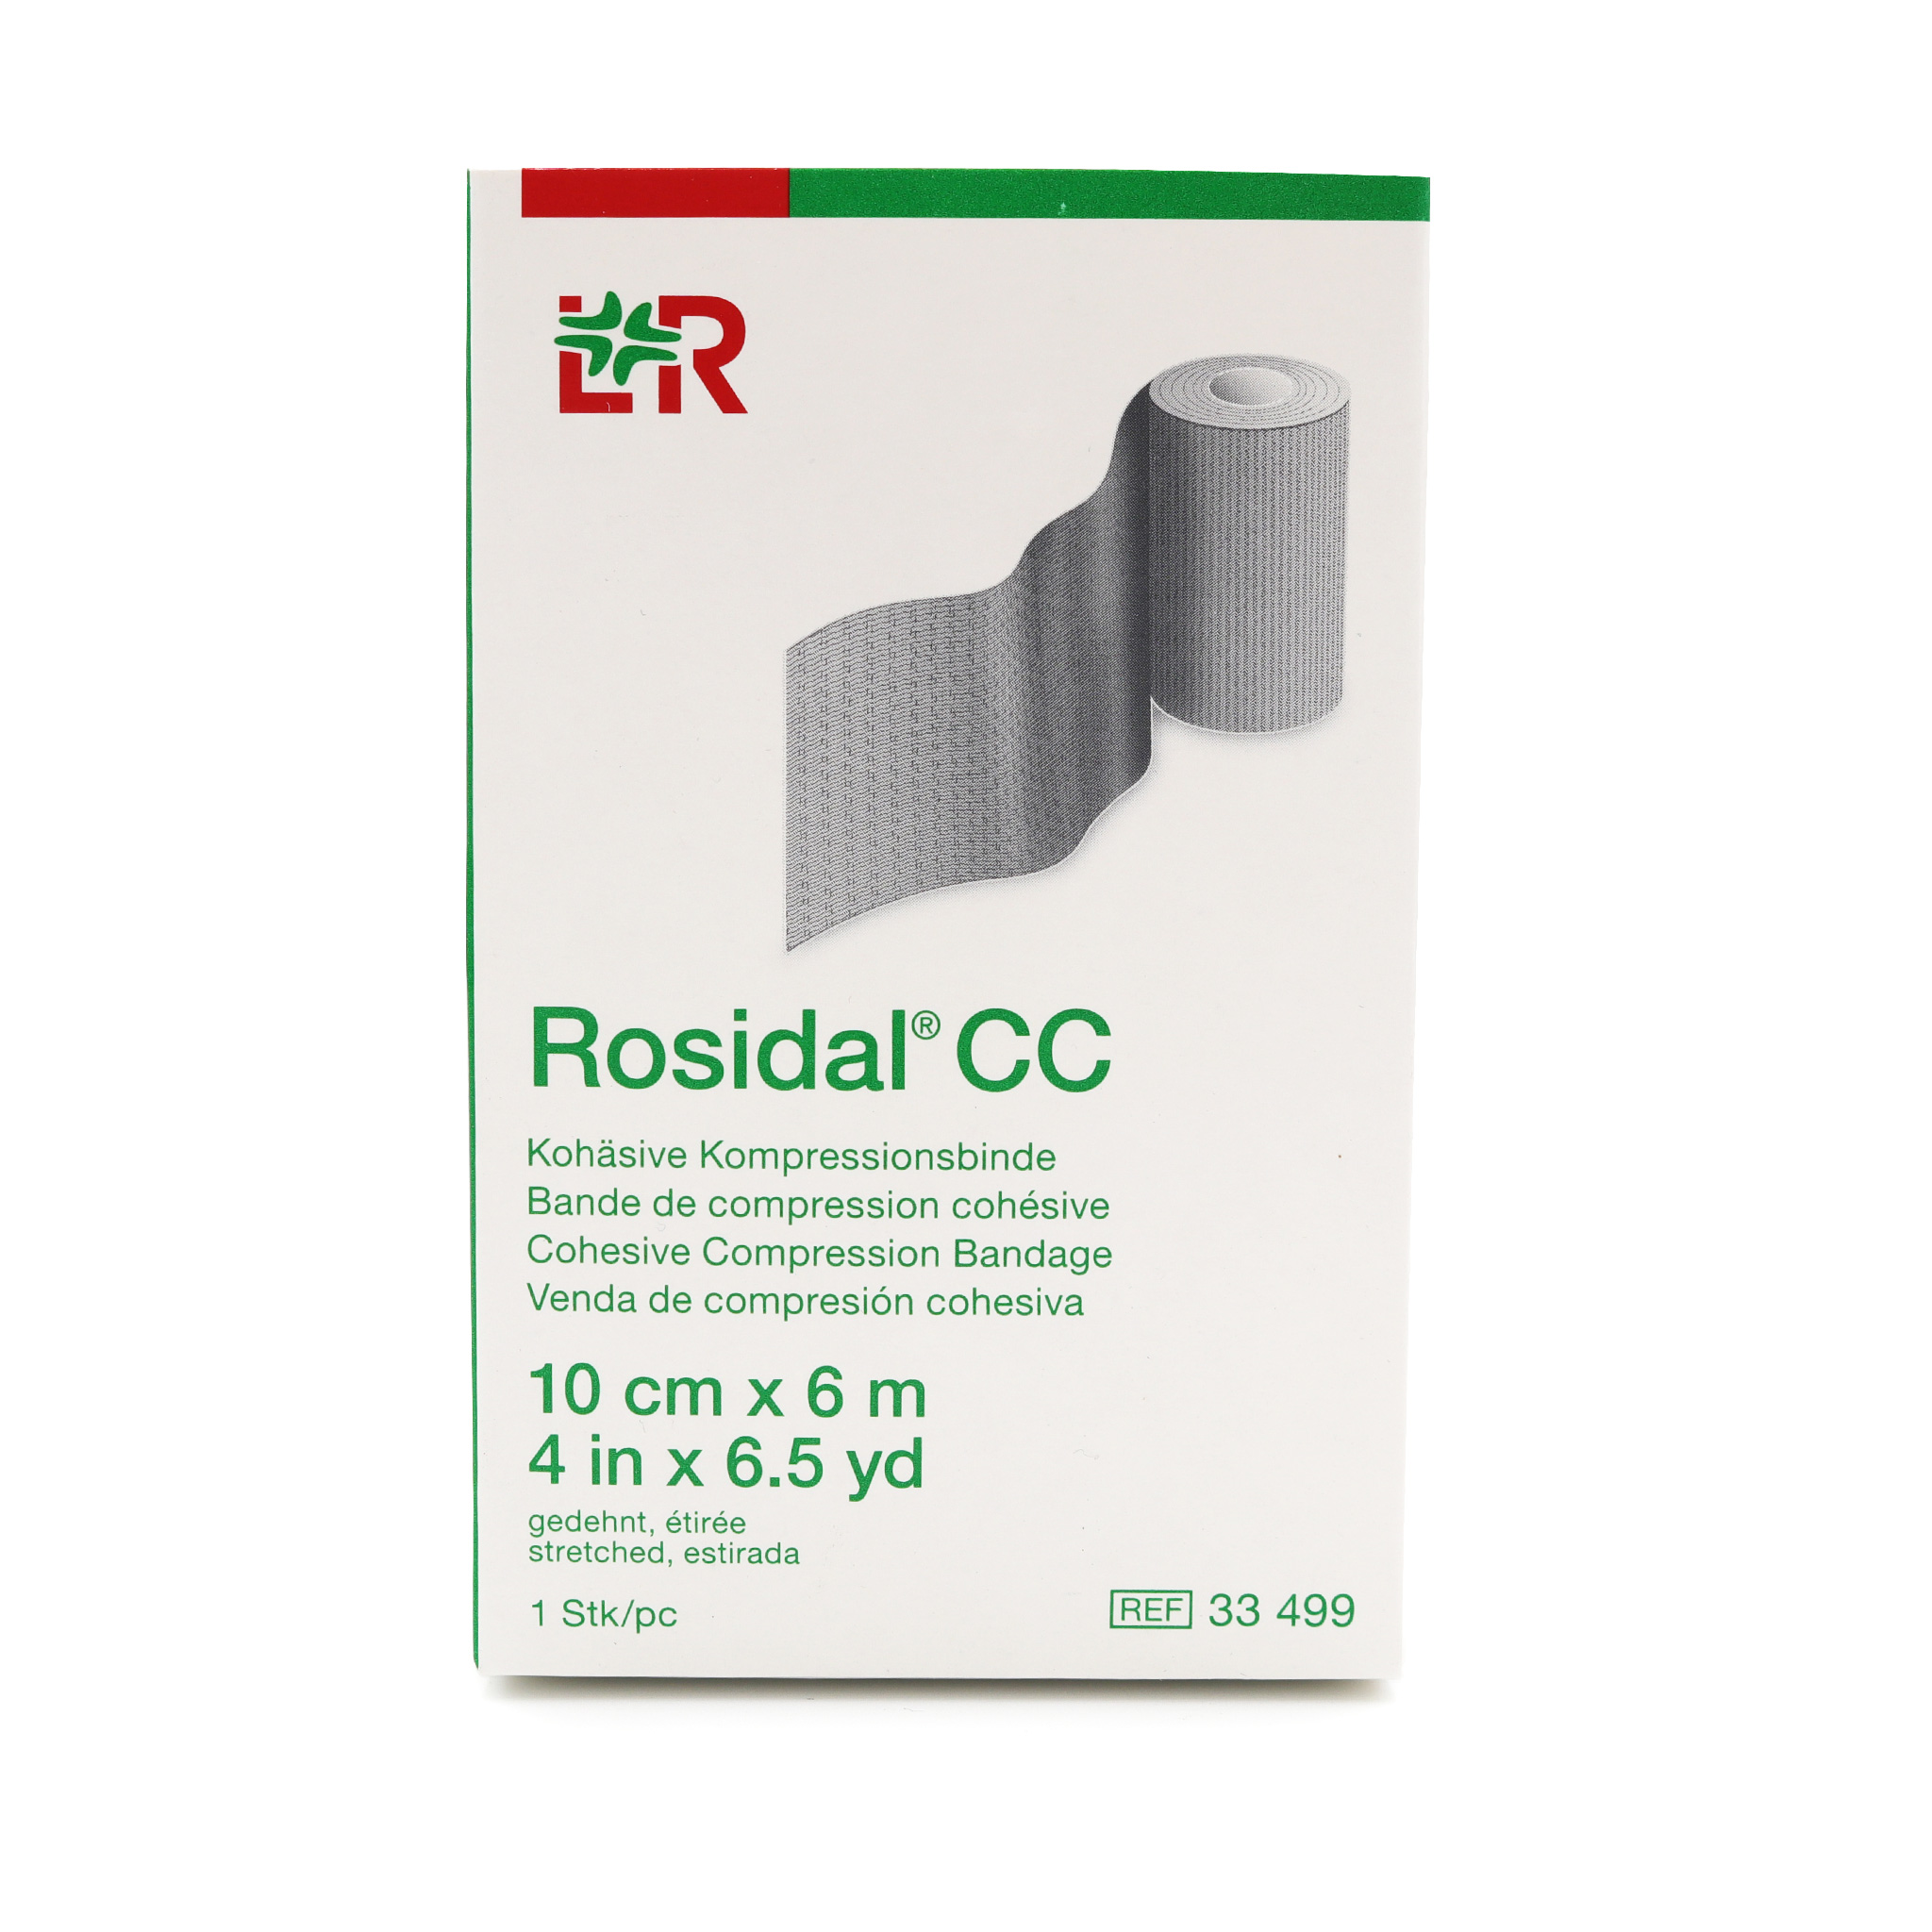 Rosidal CC latexfrei, 10 cm x 6 m